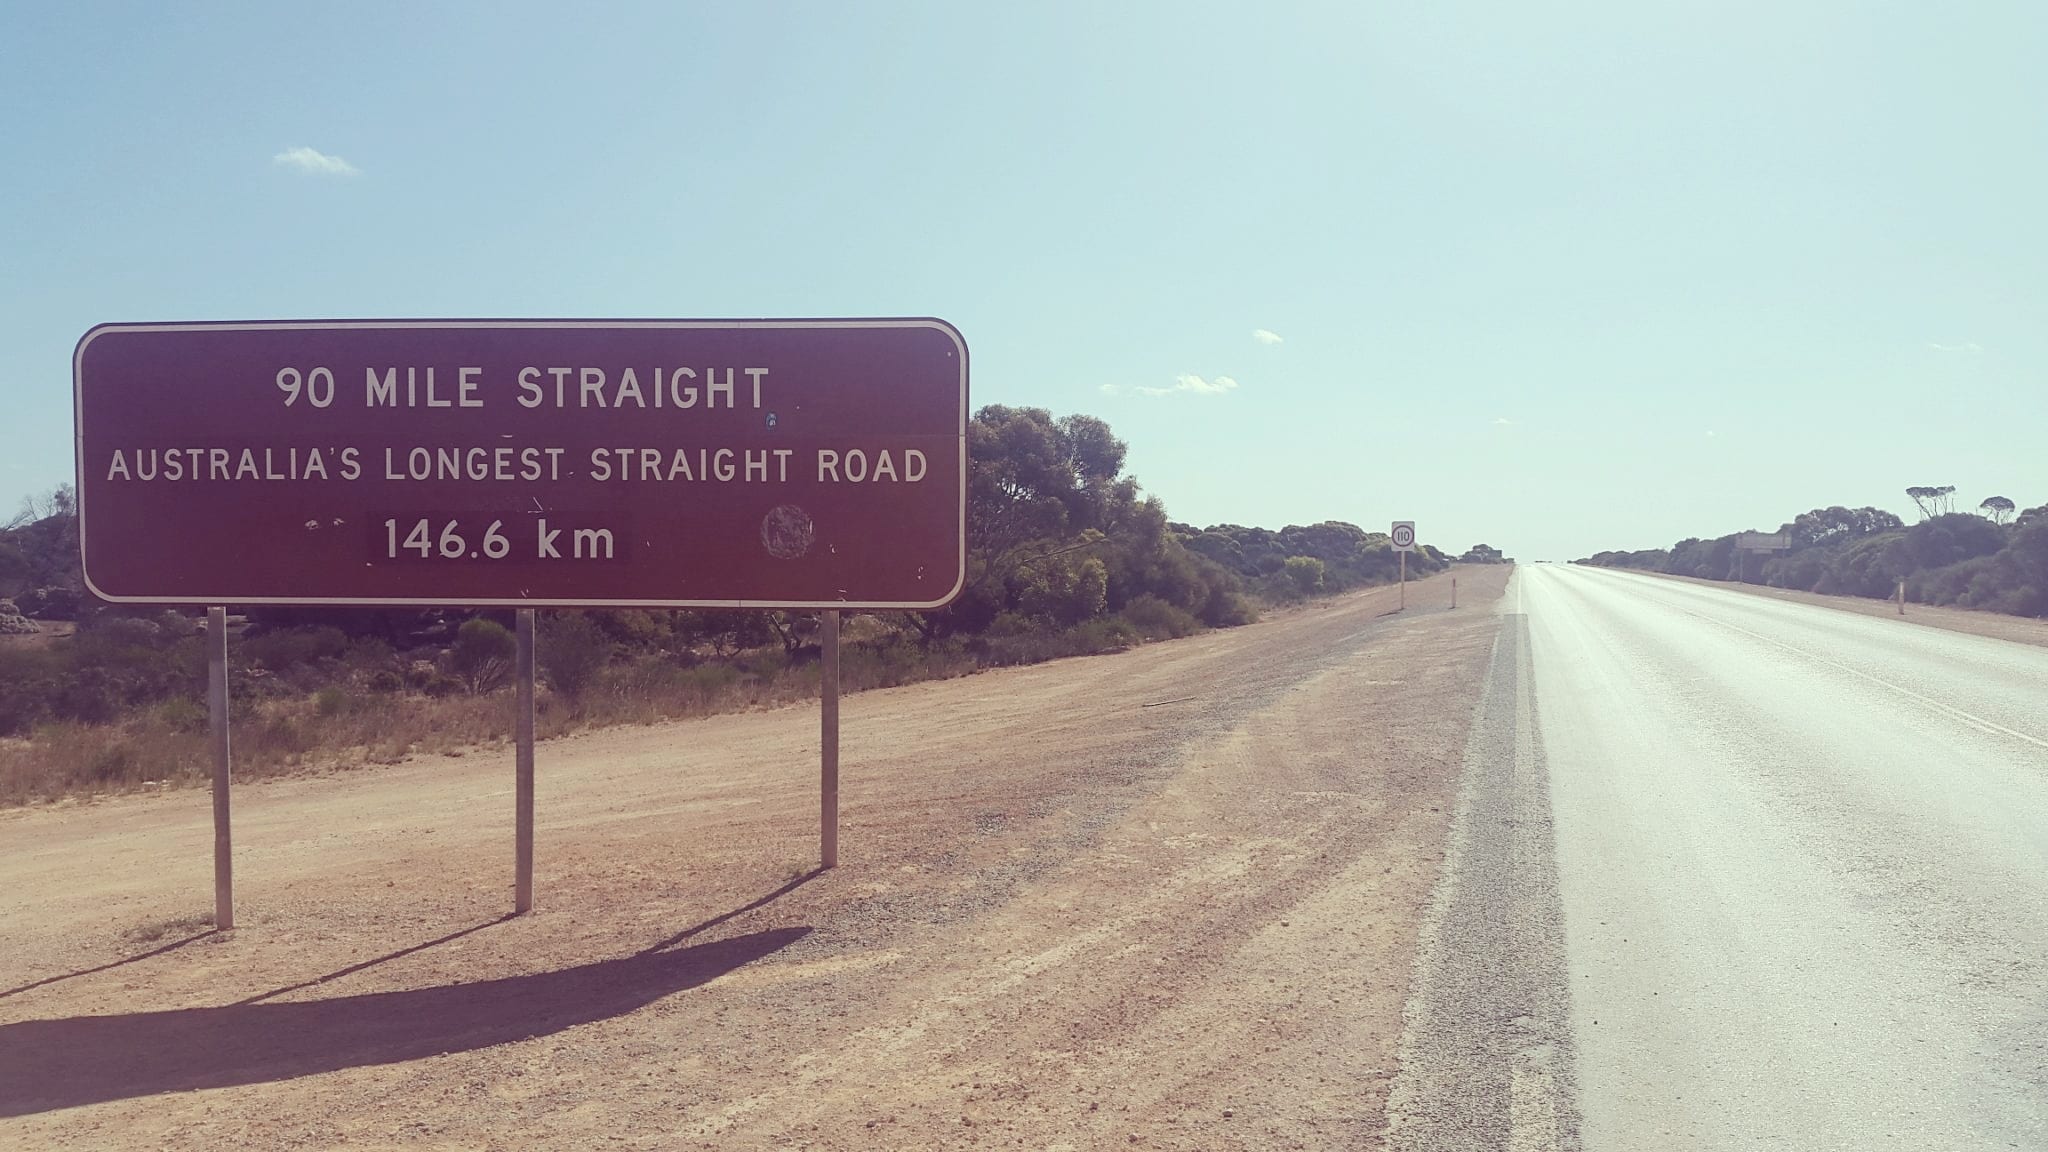 The world's longest road crossing the Nullarbor Plain